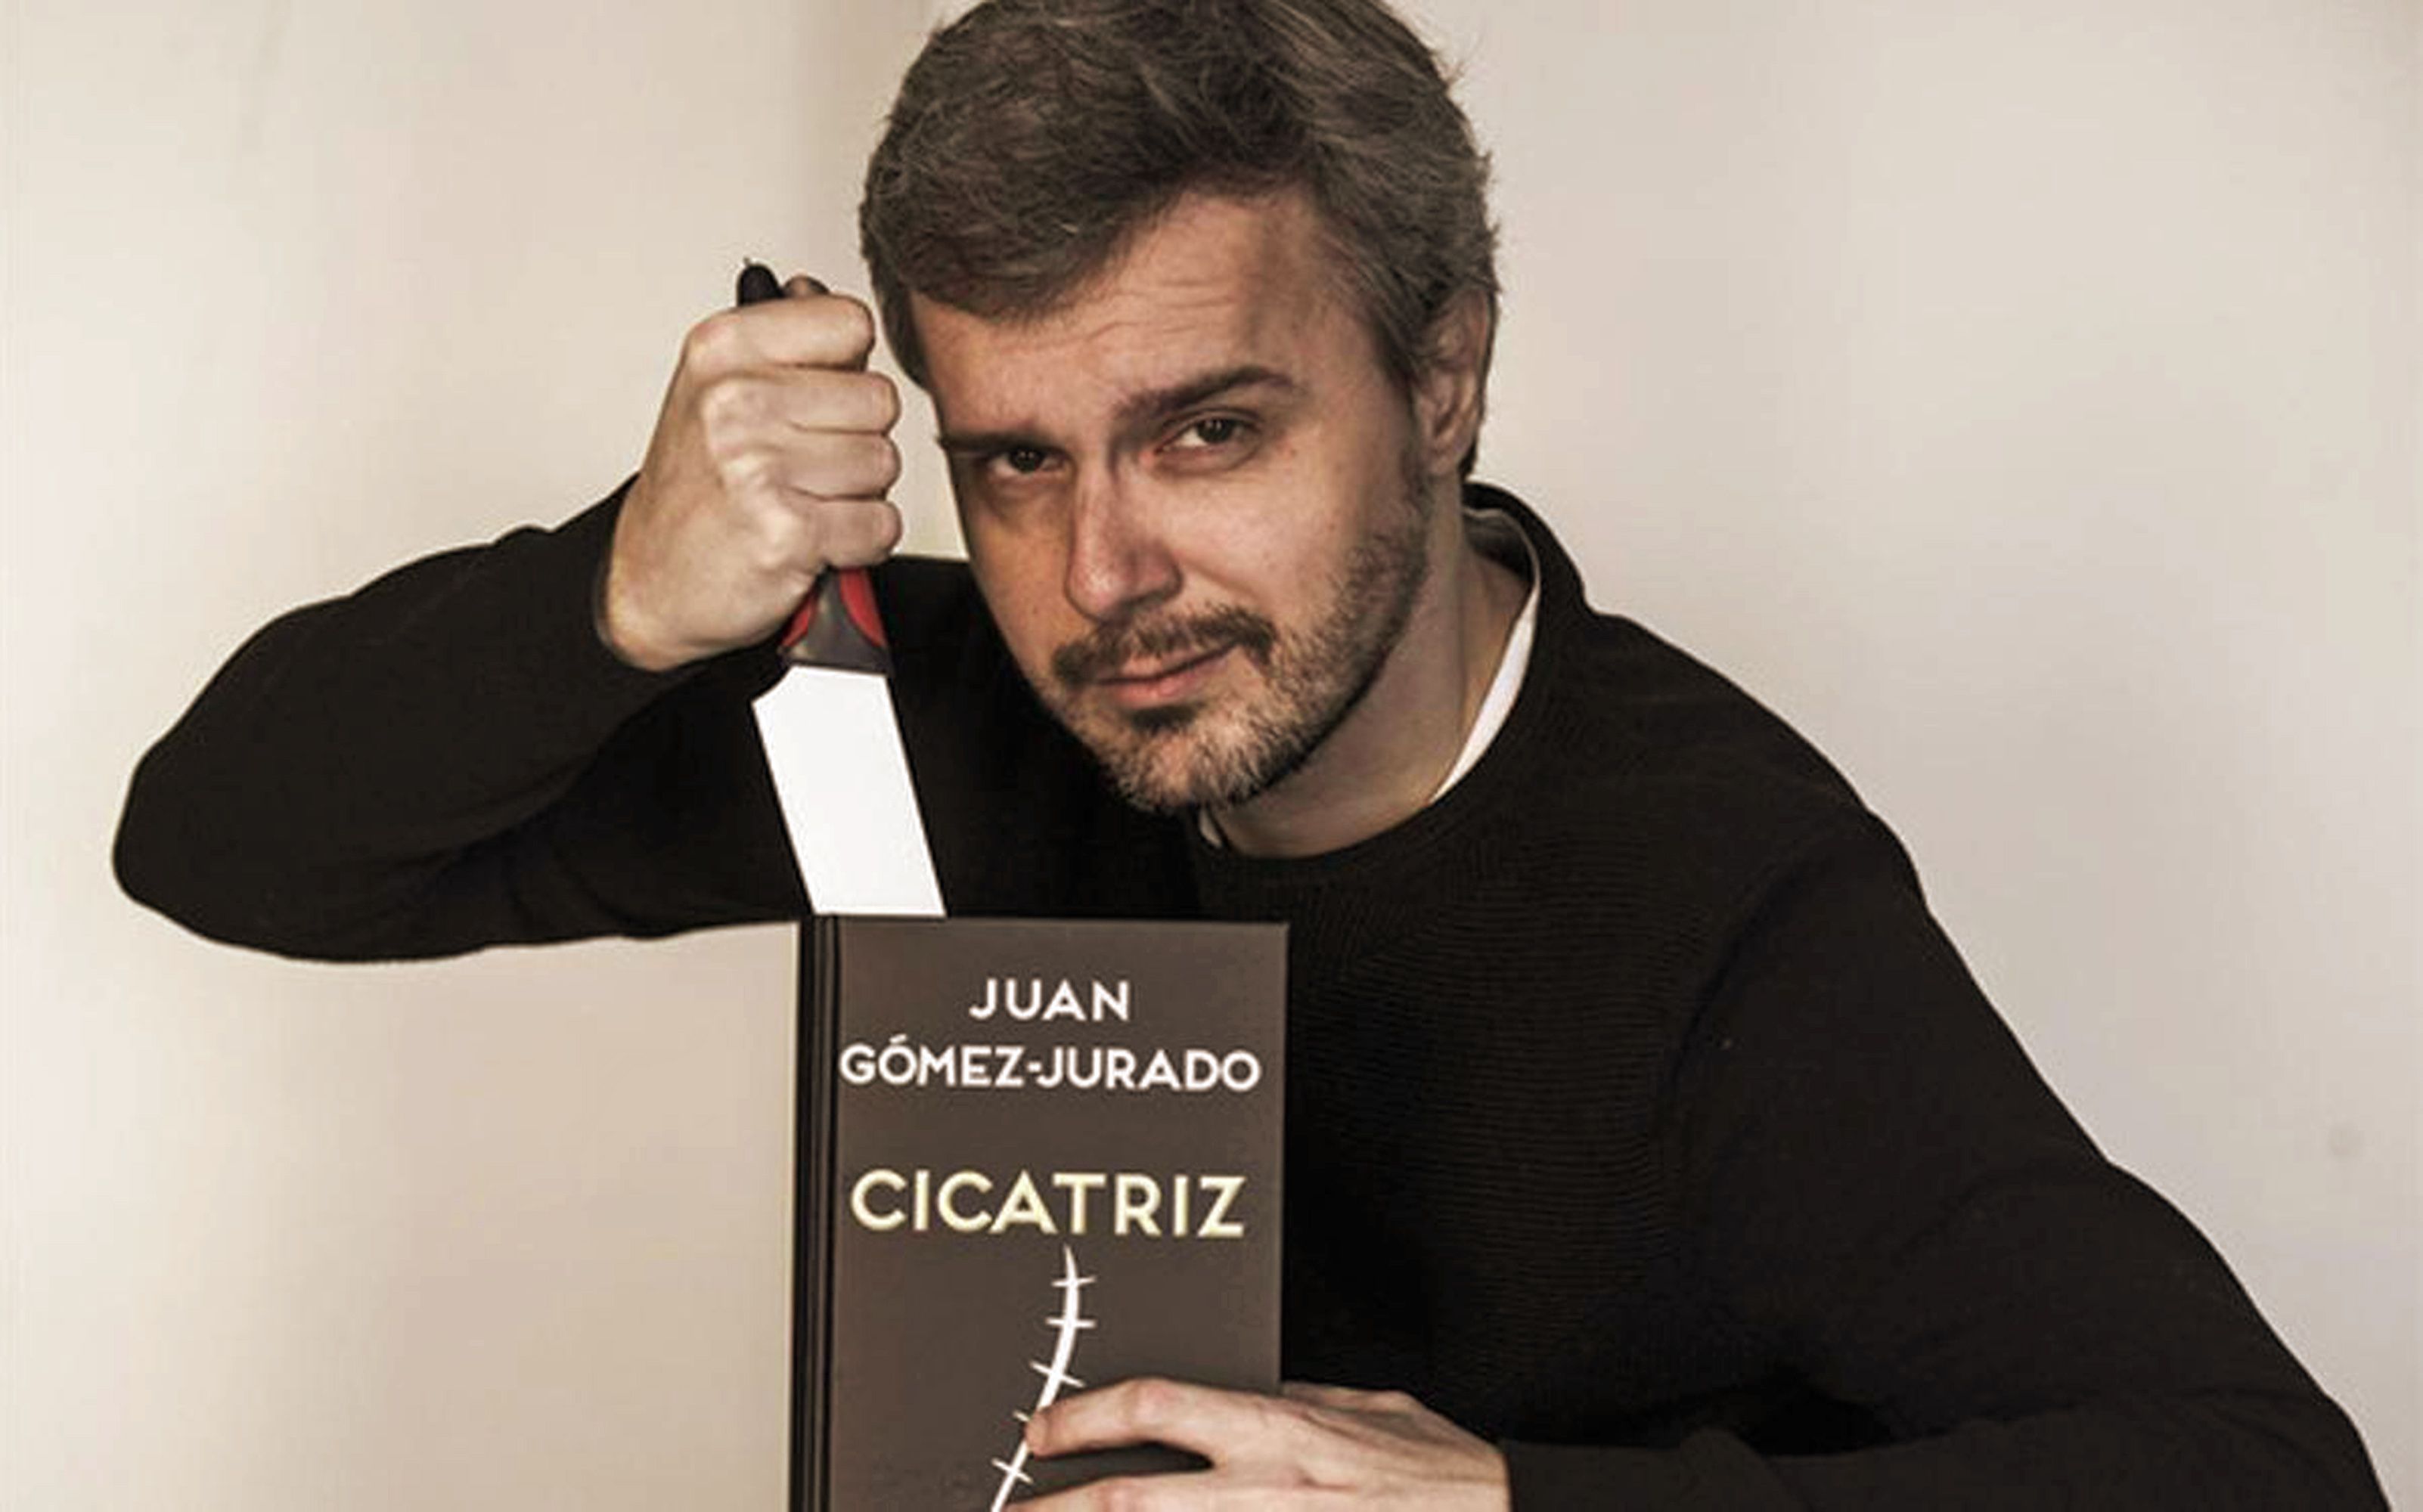 Cicatriz - Juan Gómez-Jurado -5% en libros